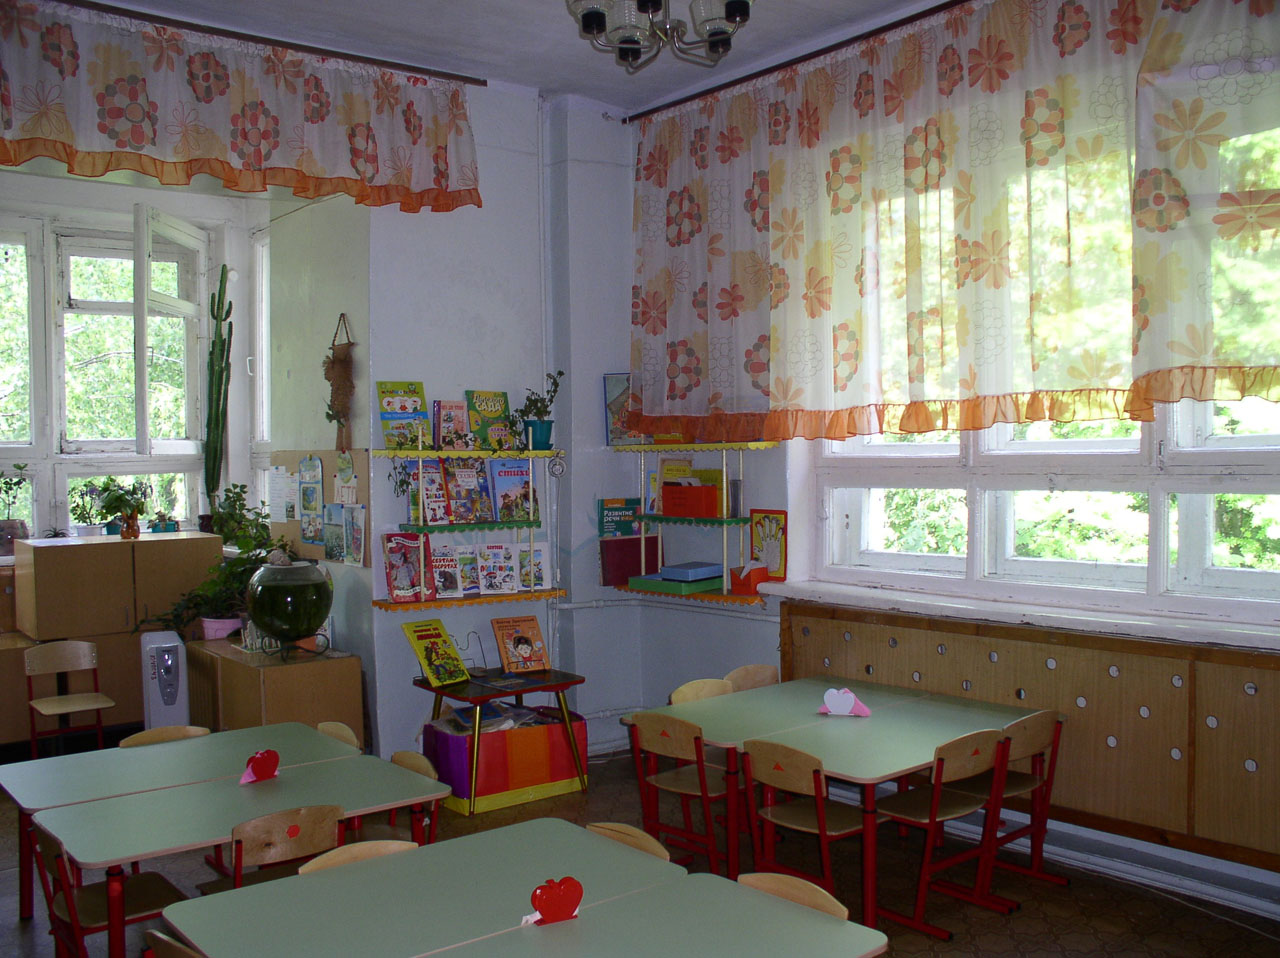 kurtina para sa dekorasyon ng larawan sa kindergarten